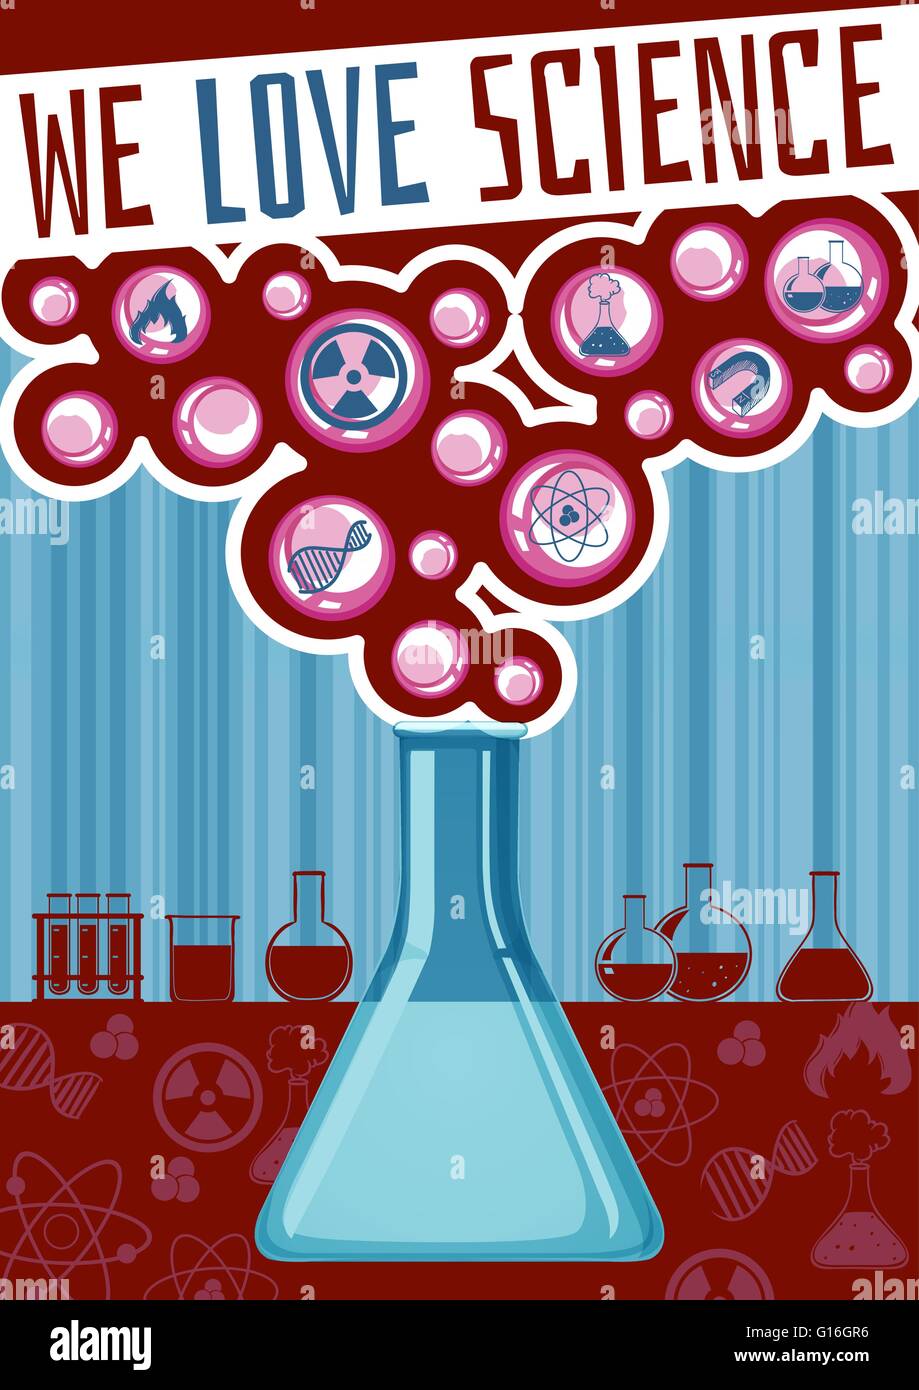 We love science illustration Stock Vector Image Art - Alamy